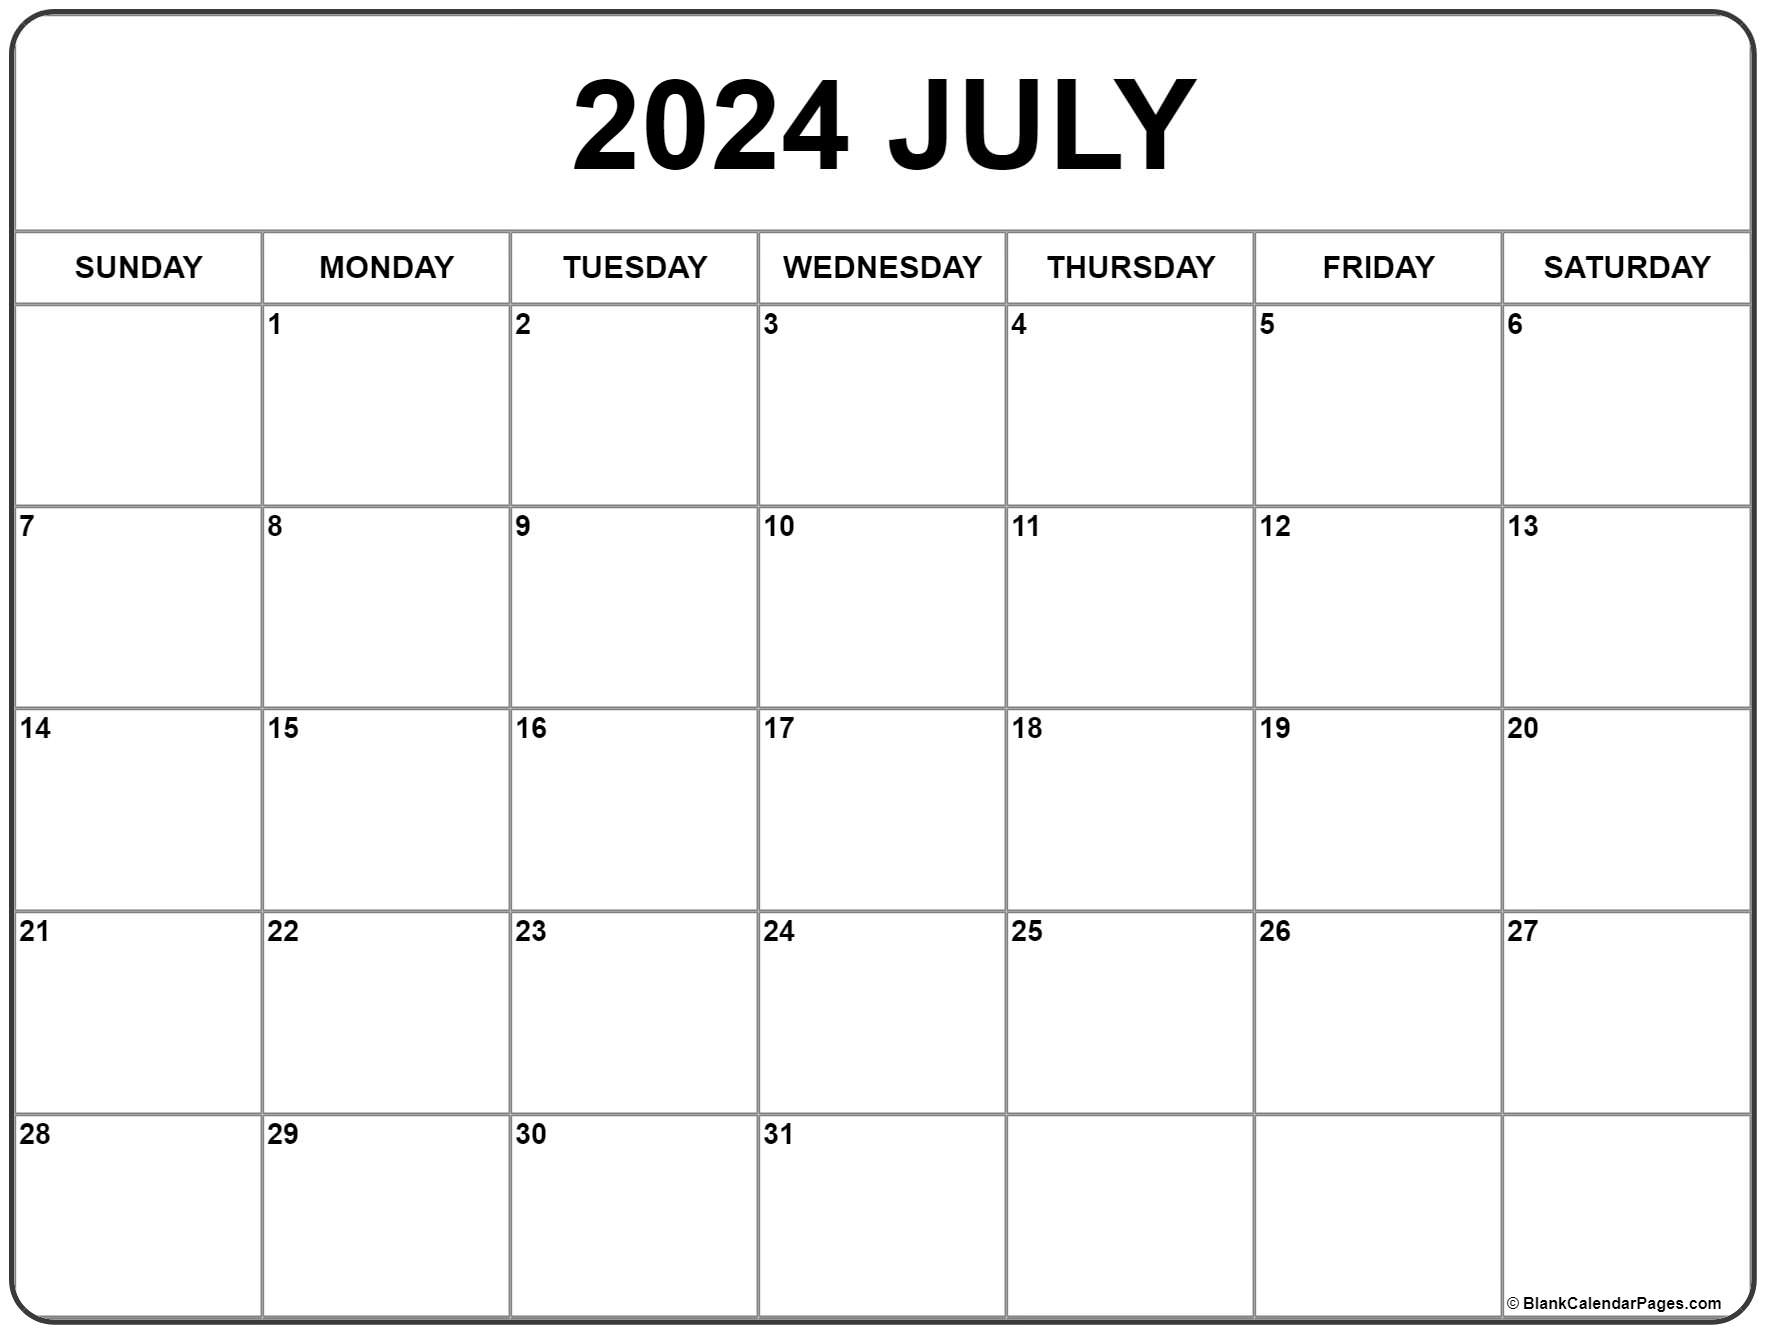 July 2024 Calendar | Free Printable Calendar for July 2024 Calendar Copy and Paste